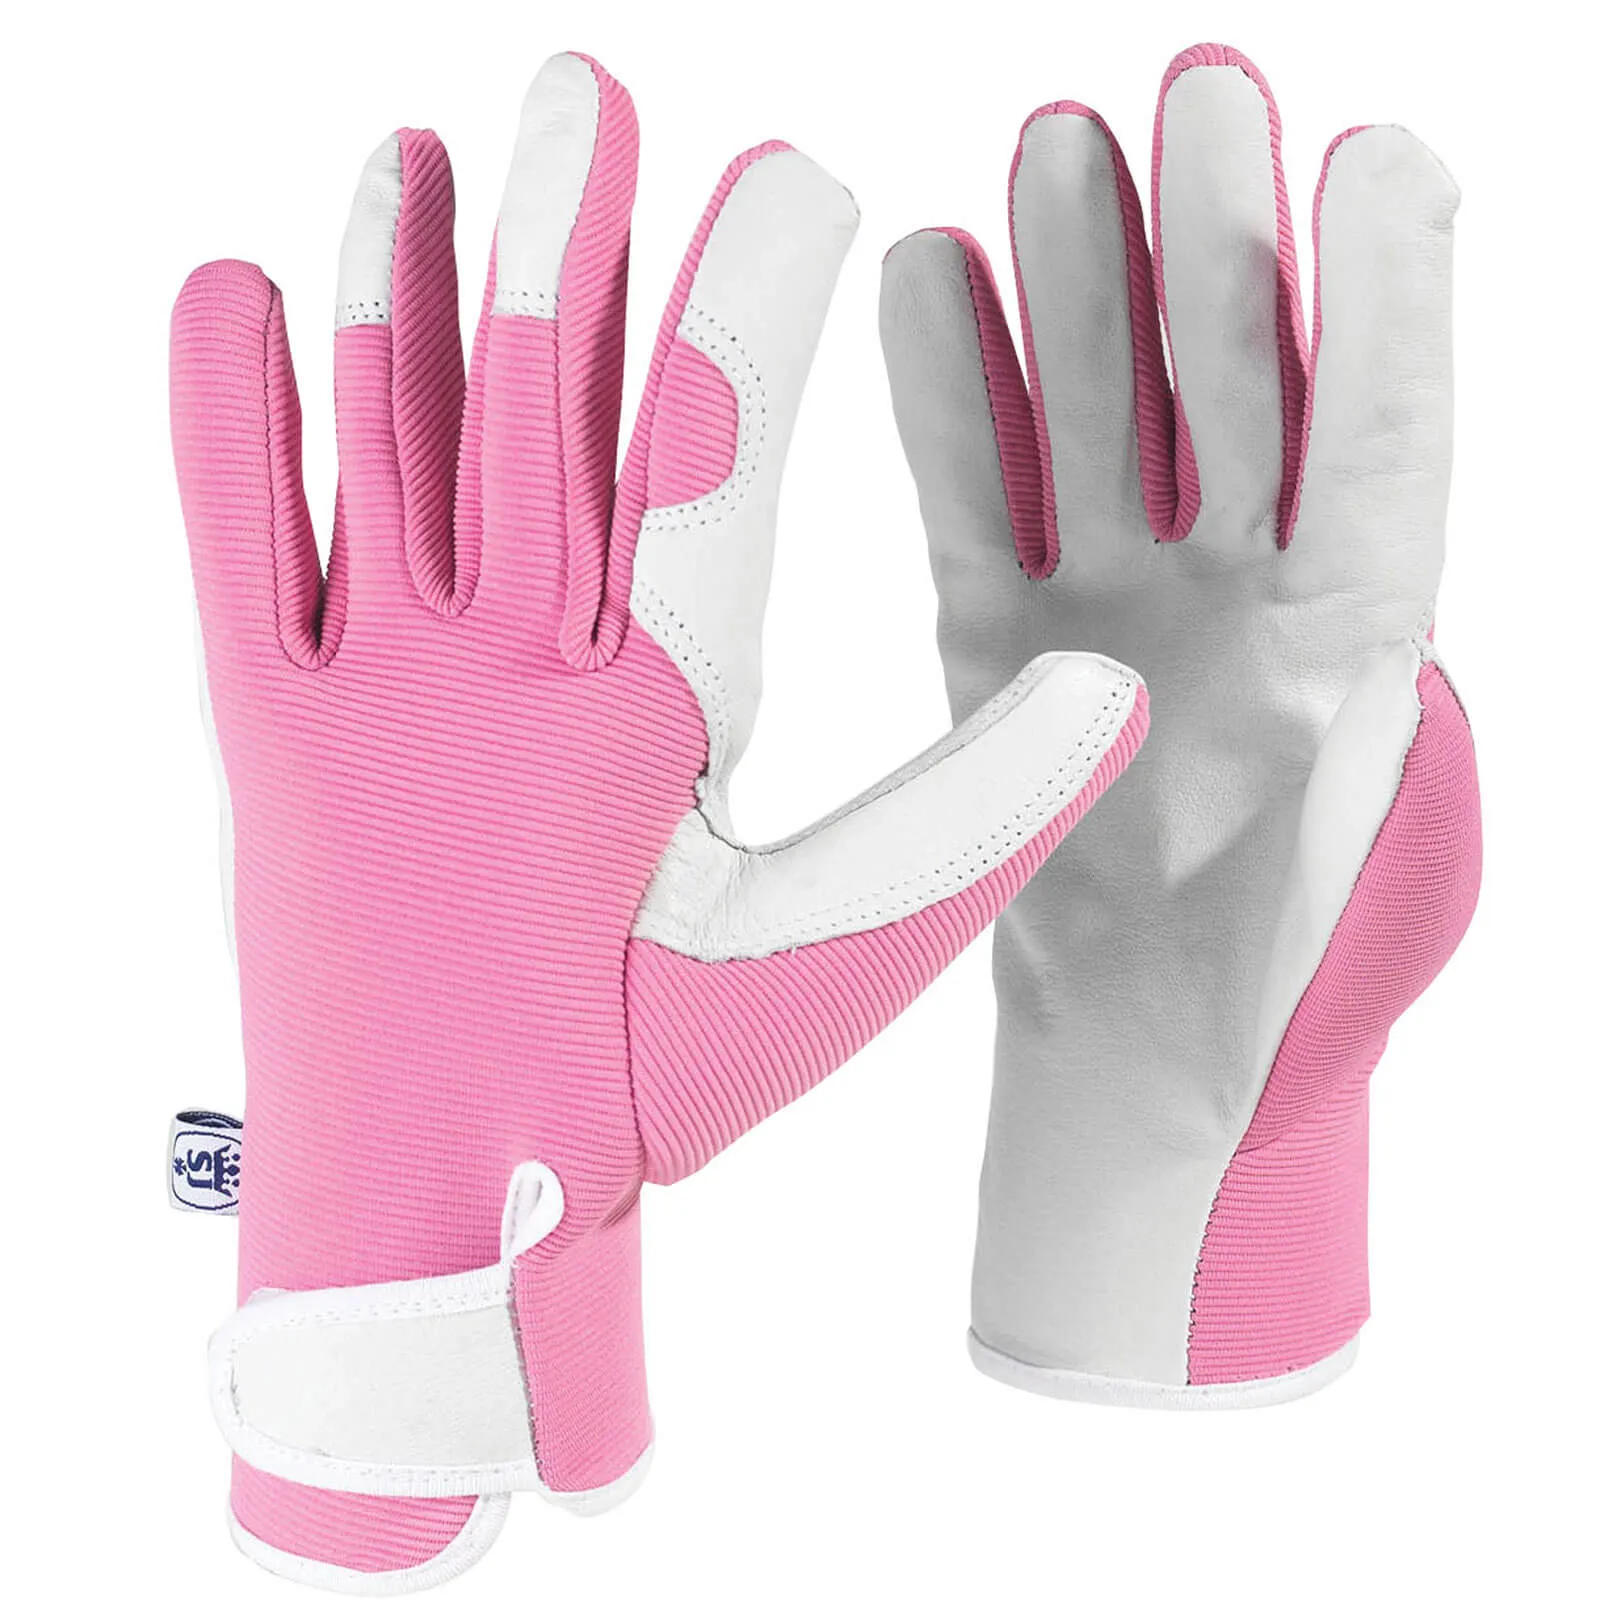 Kew Gardens Leather Palm Gardening Gloves - Pink, S